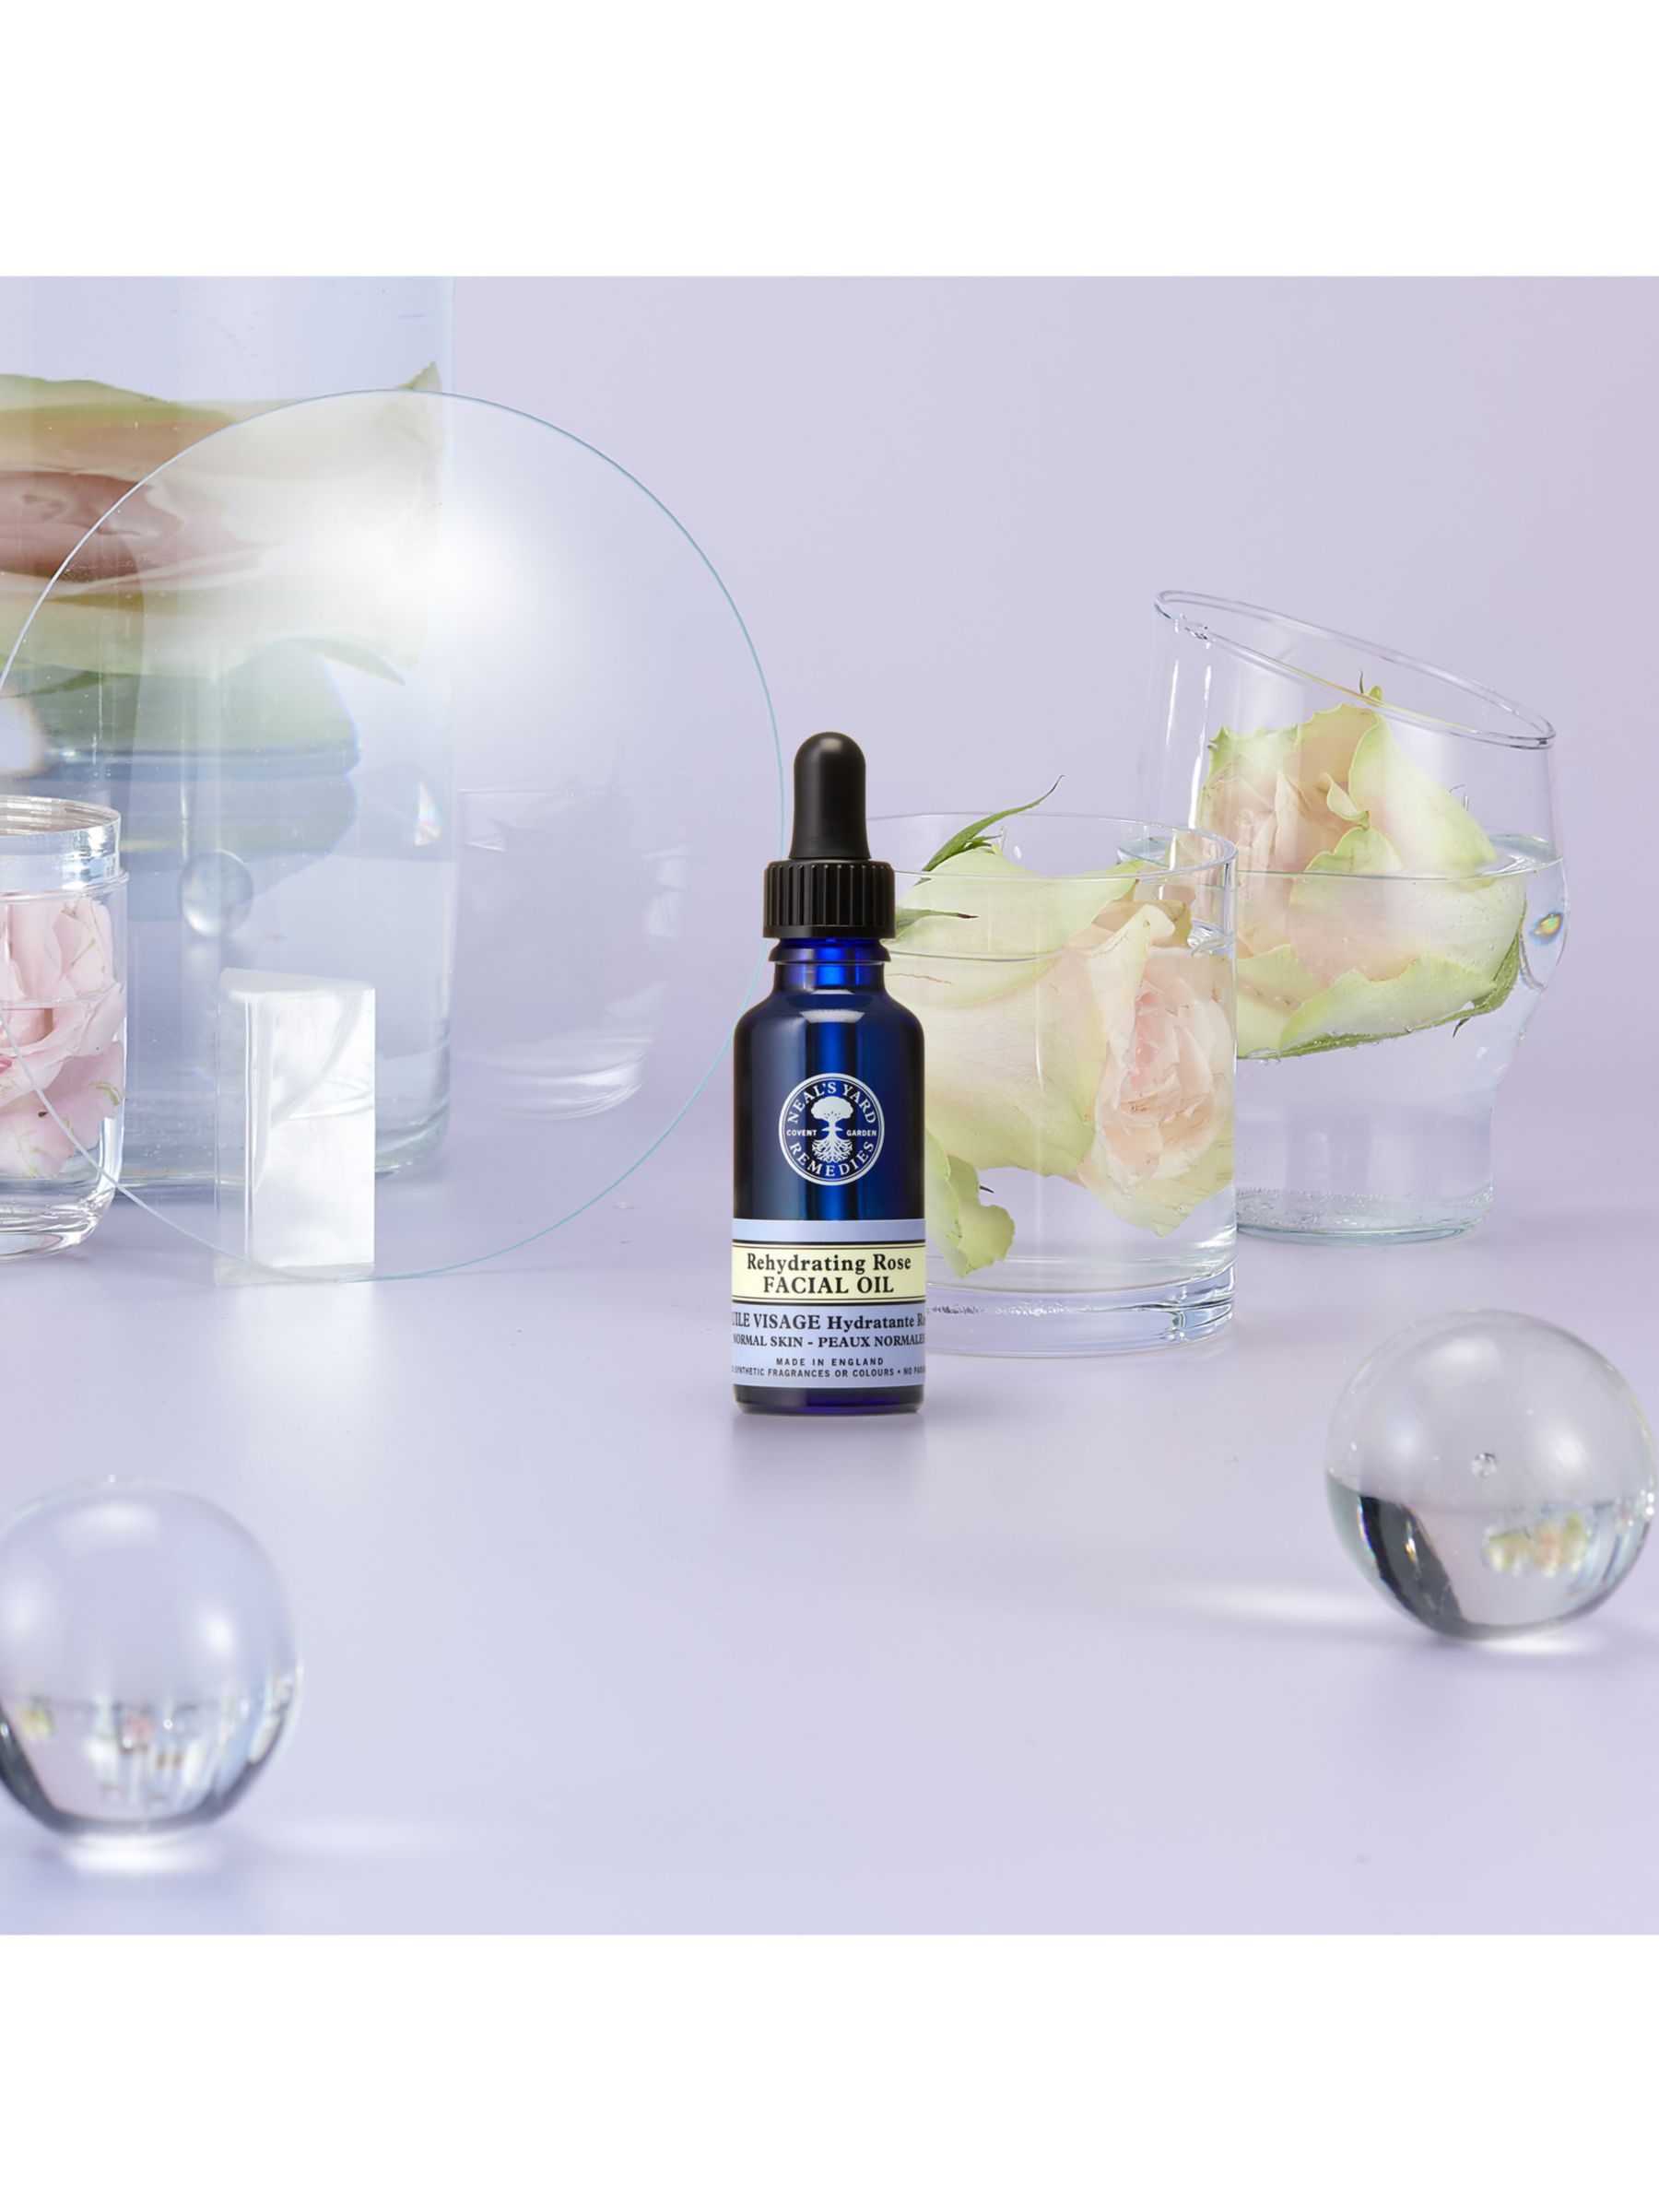 Neal's Yard Remedies Rehydrating Rose Facial Oil, 30ml 2